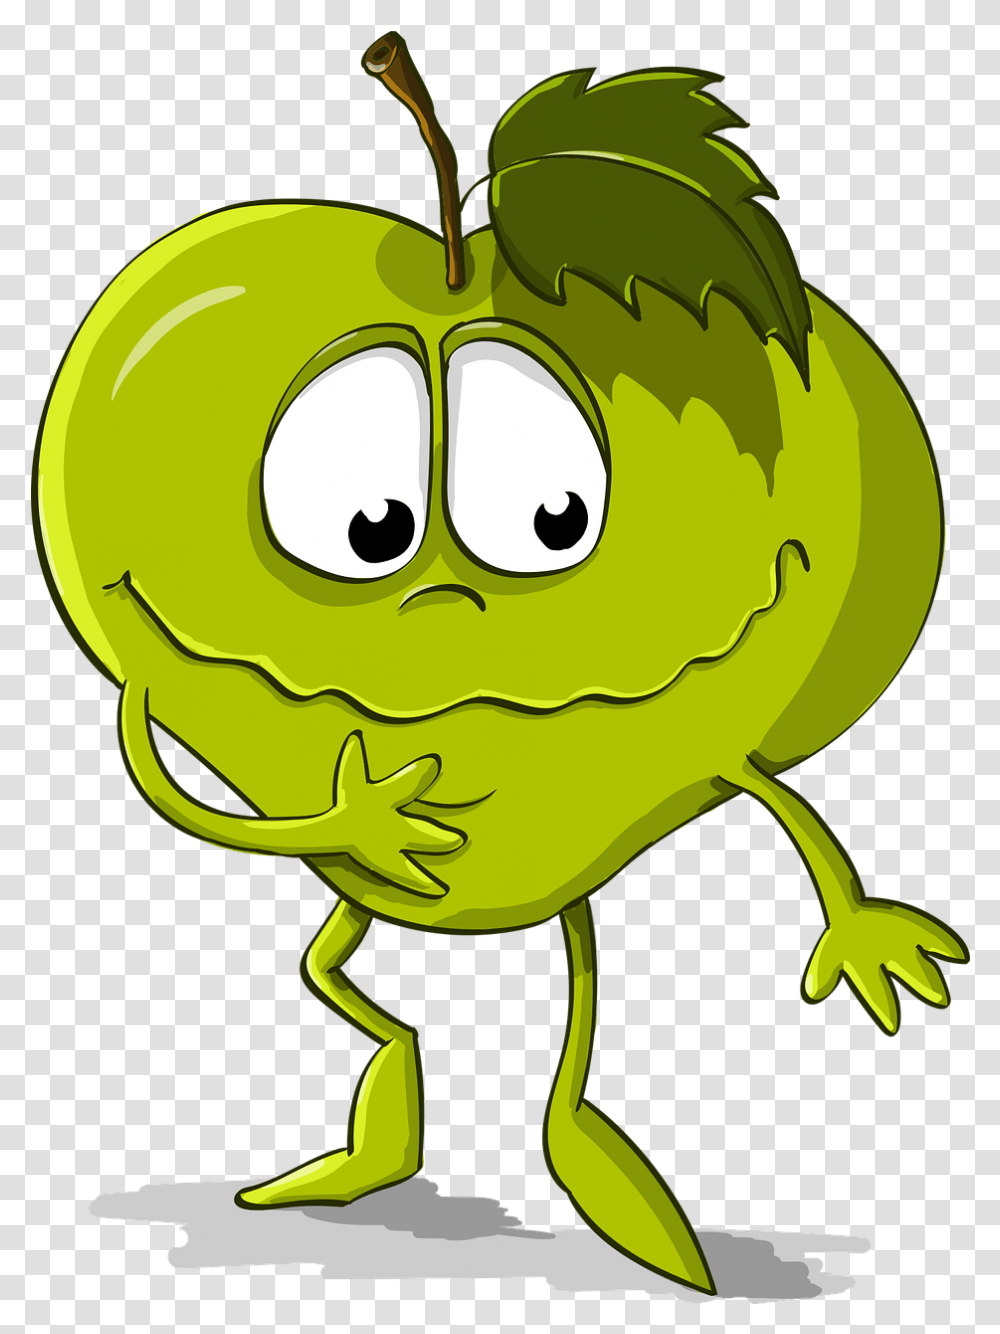 Apple Funny Smile Free Vector Graphic On Pixabay Leek Joke, Amphibian, Wildlife, Animal, Frog Transparent Png